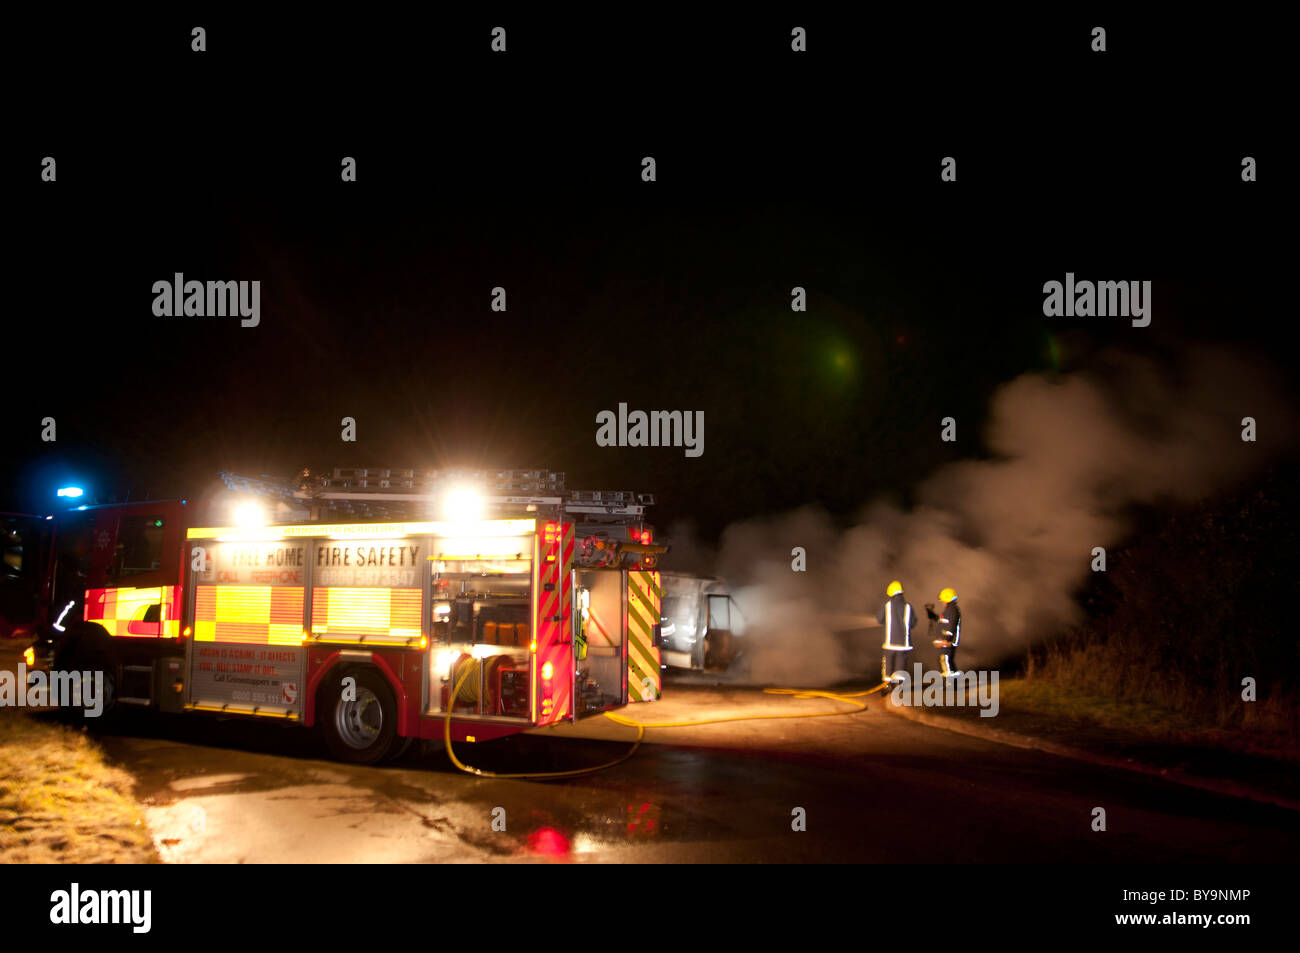 Fire Pump Ladder at a burning car at night Stock Photo